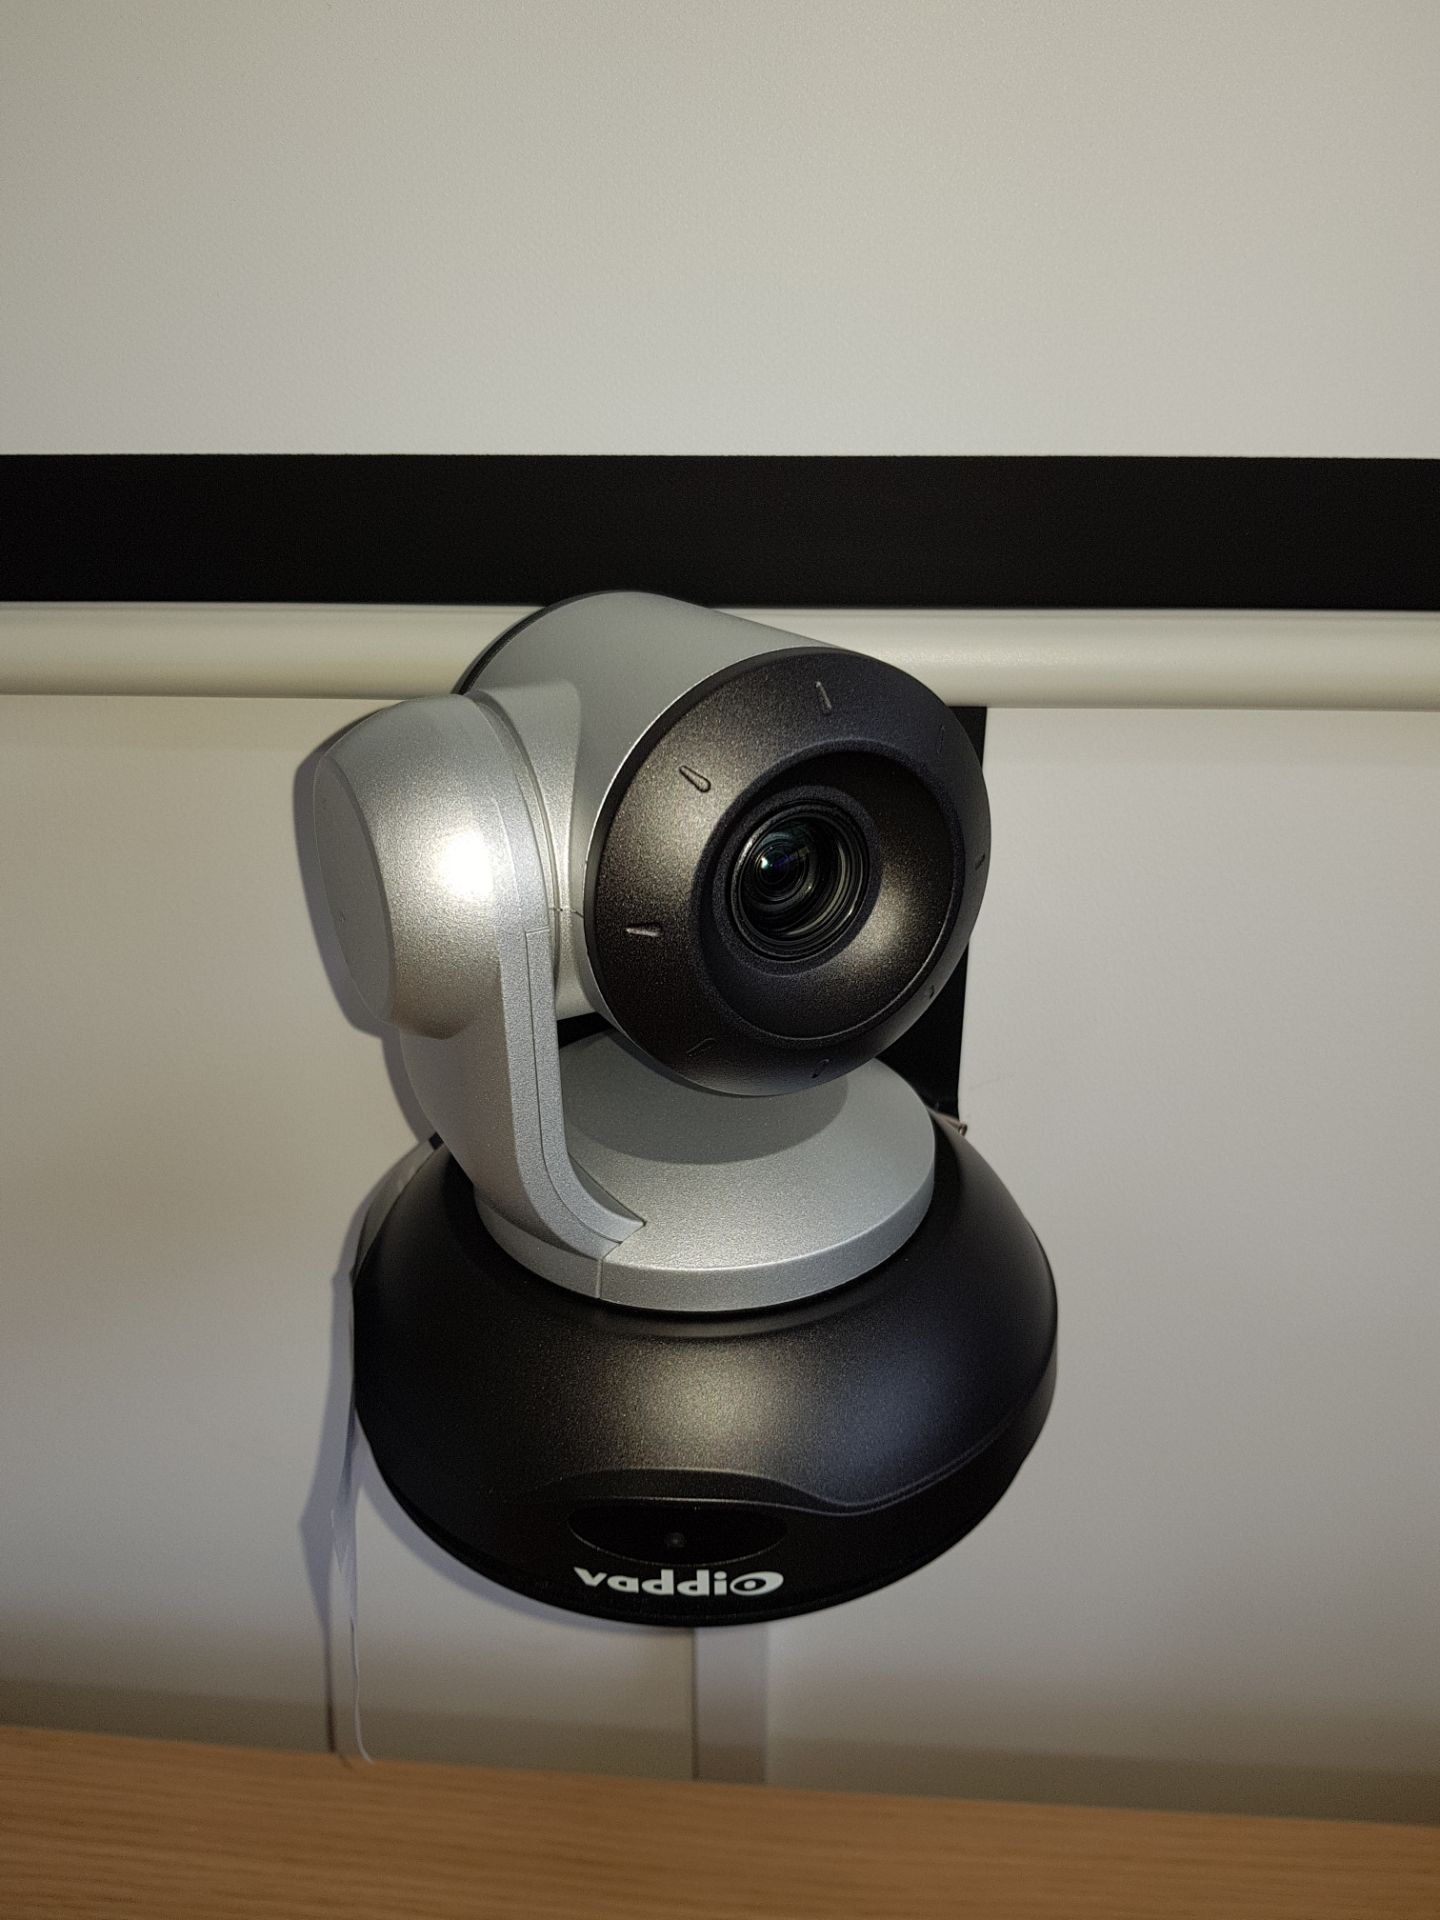 Vaddio Conference Camera